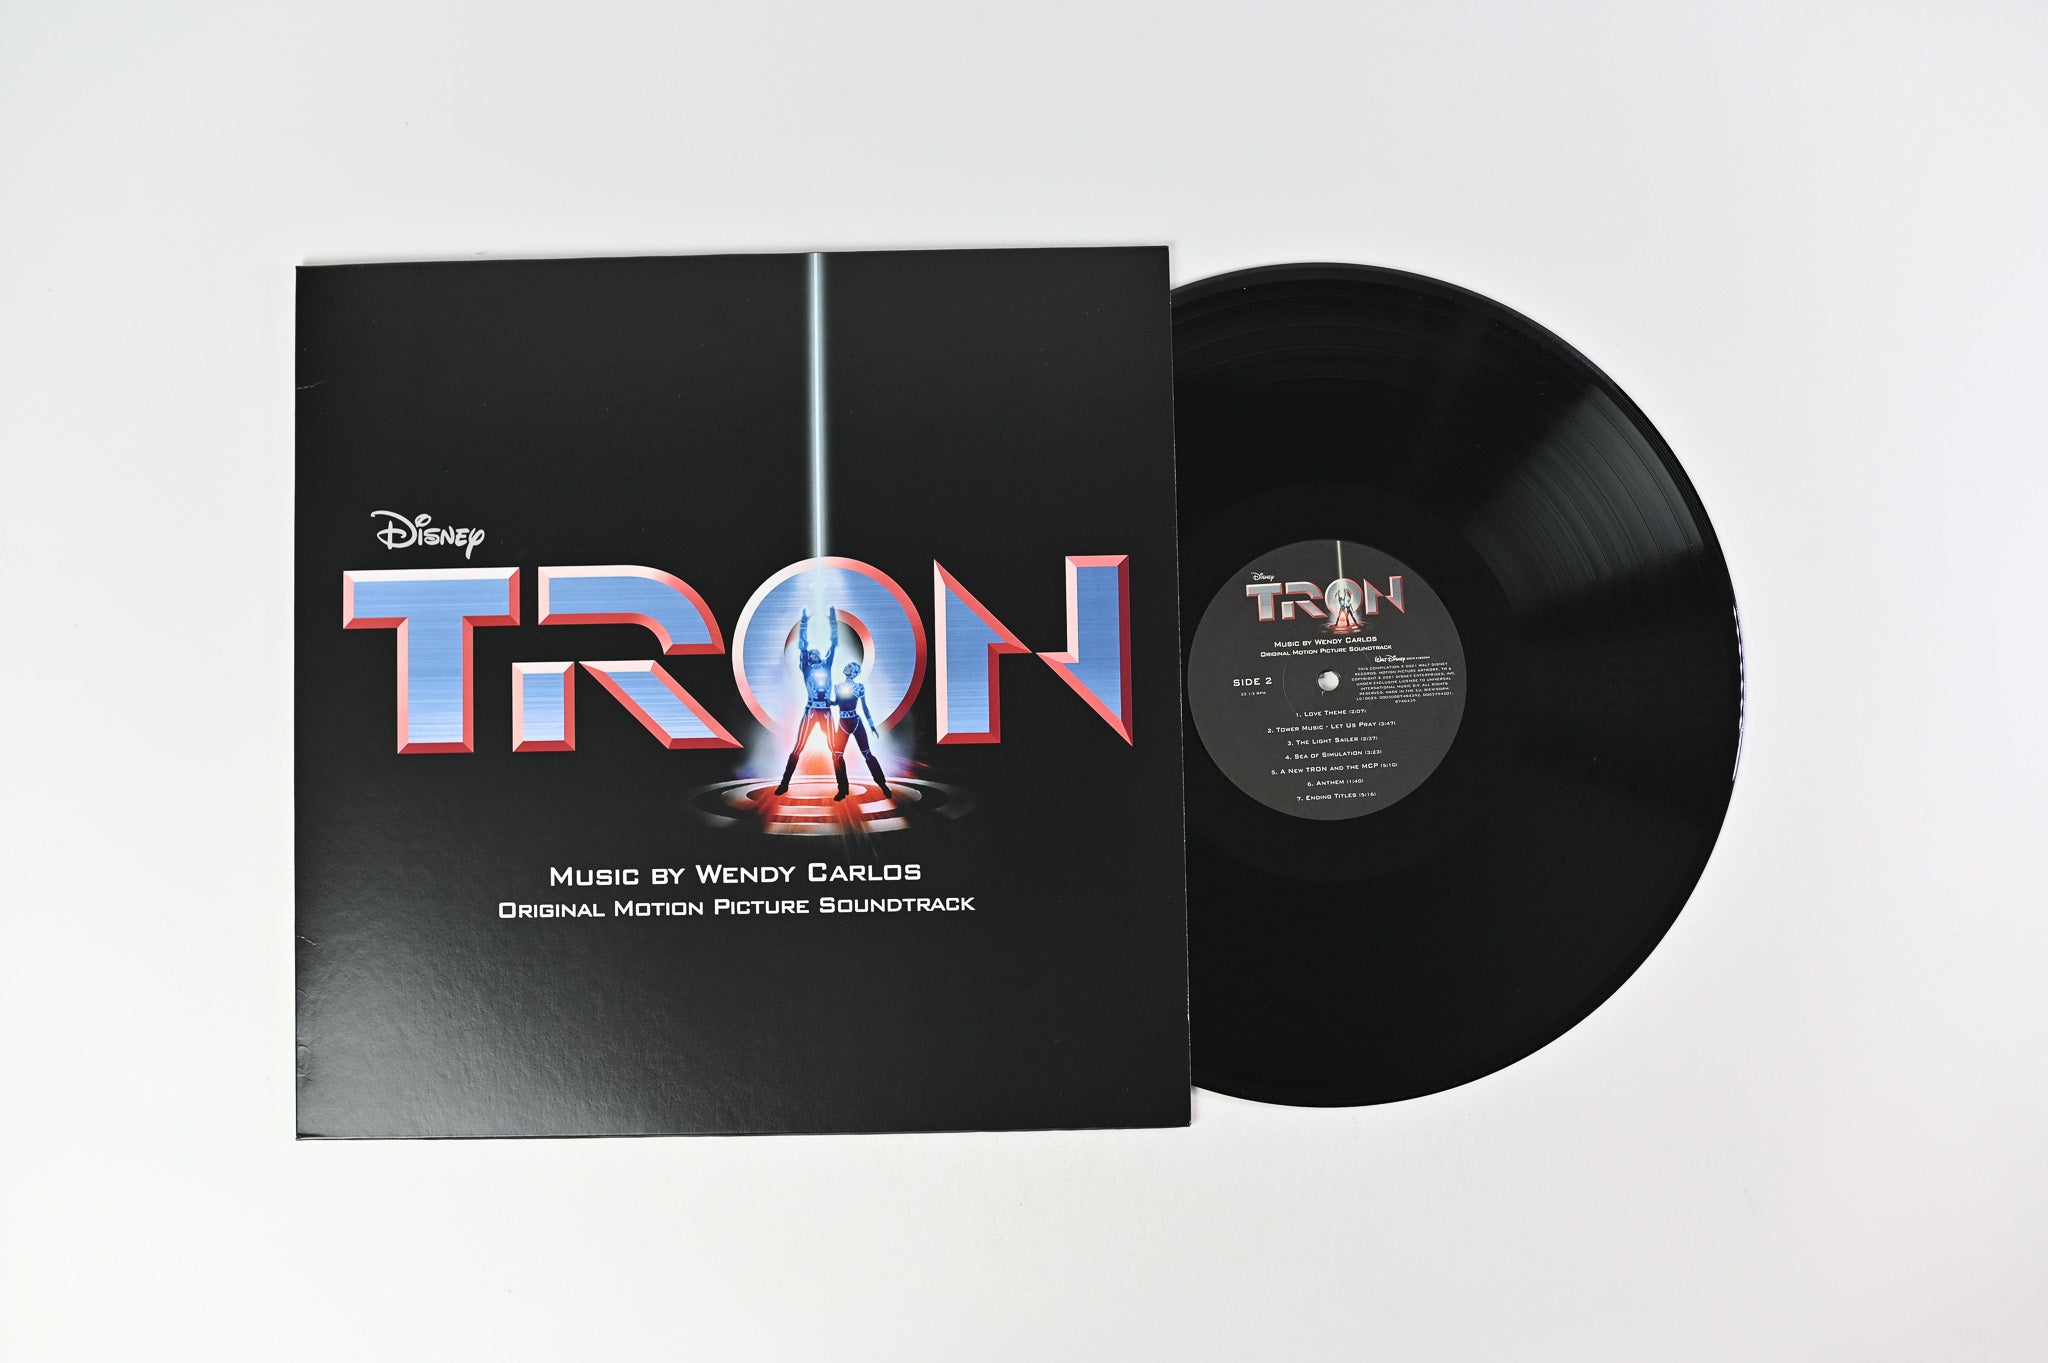 Wendy Carlos - Tron (Original Motion Picture Soundtrack) on Disney Reissue